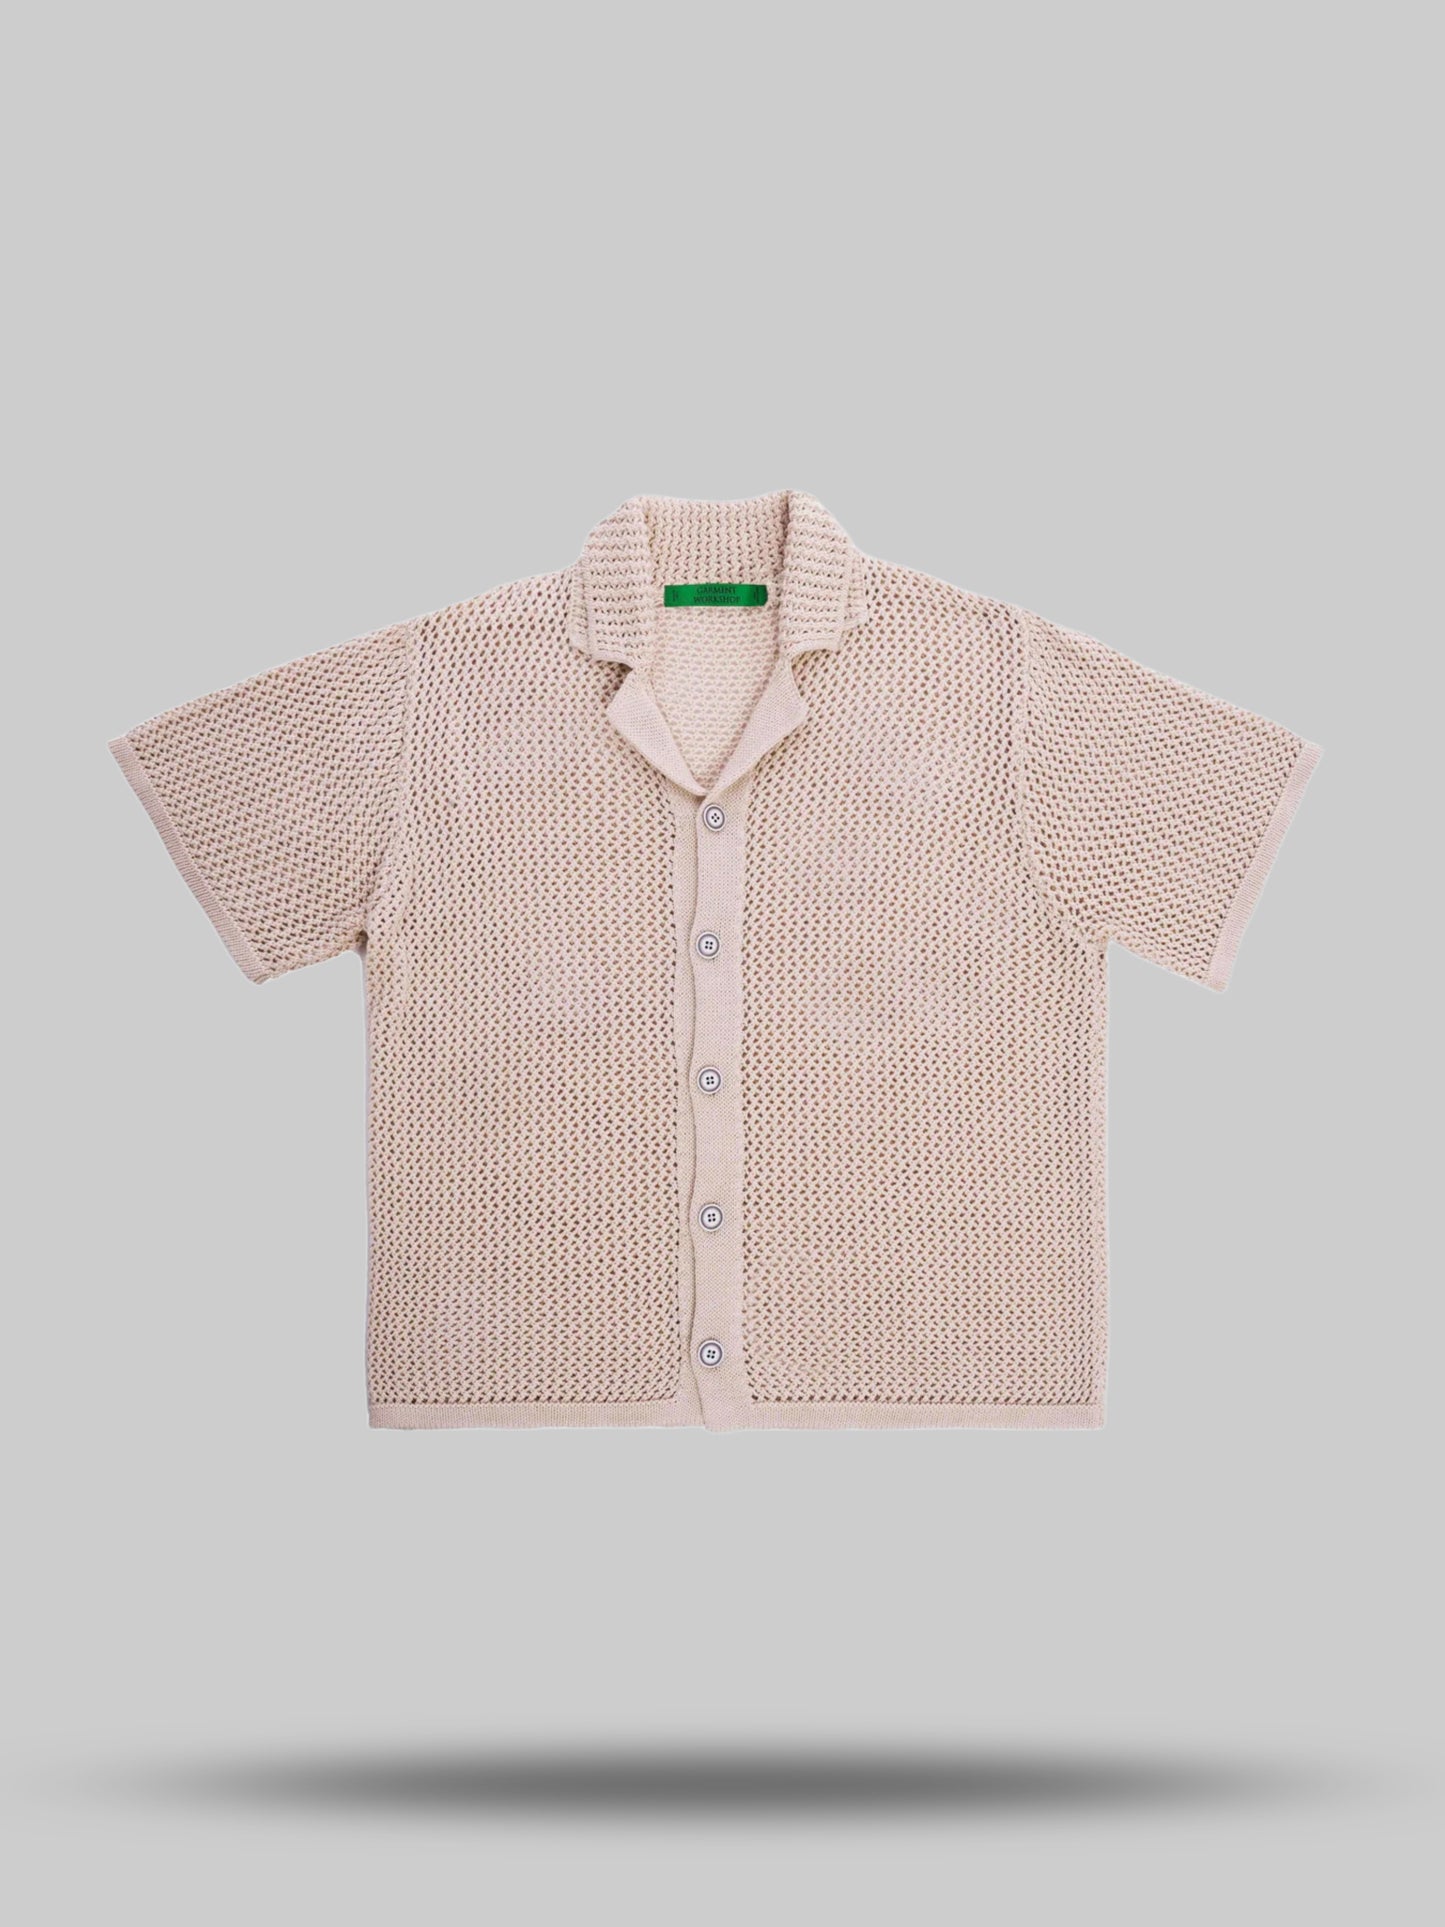 Cream Crochet Short Sleeve Shirt Garment Workshop